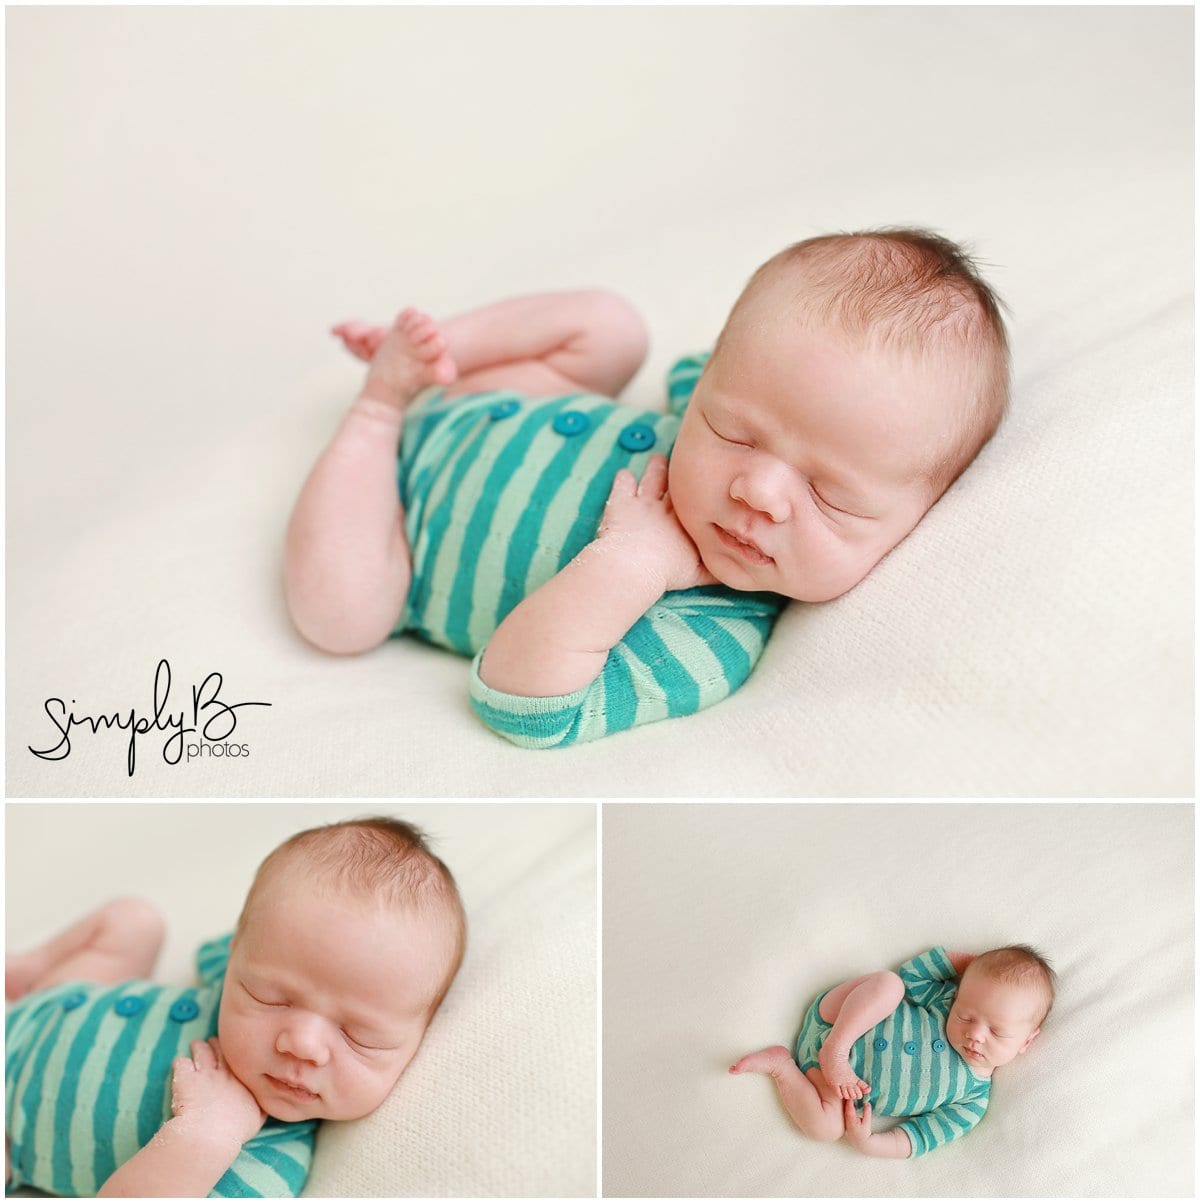 edmonton newborn photographer baby boy sleeping poses with blue outfit